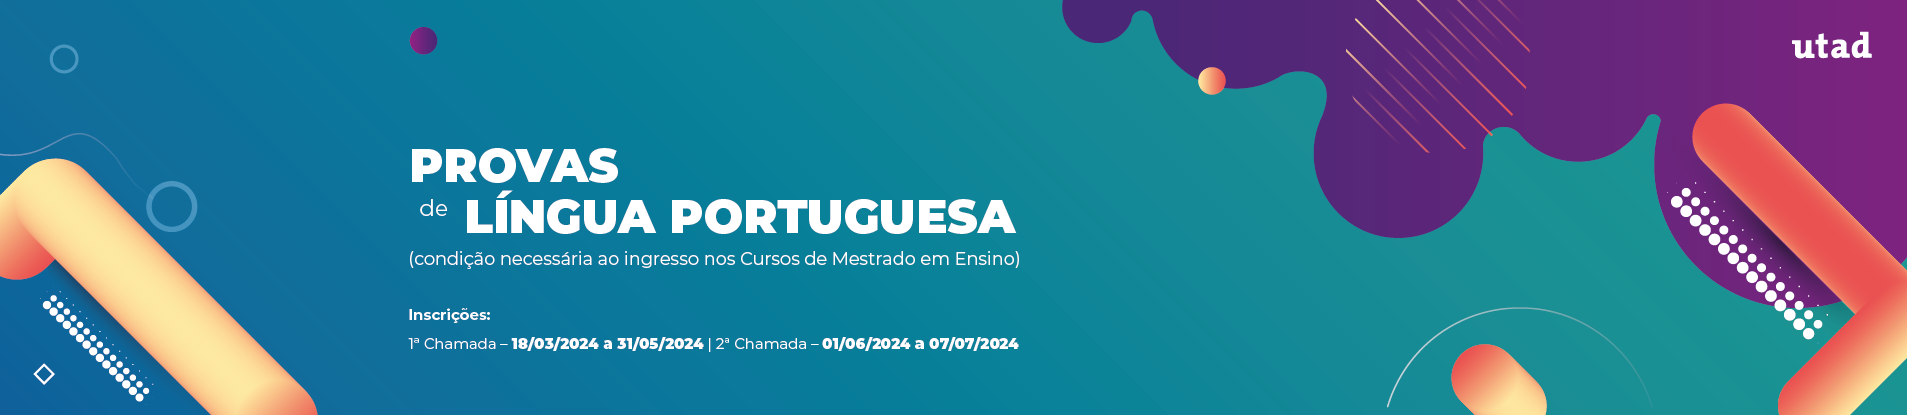 slider das Provas Língua Portuguesa